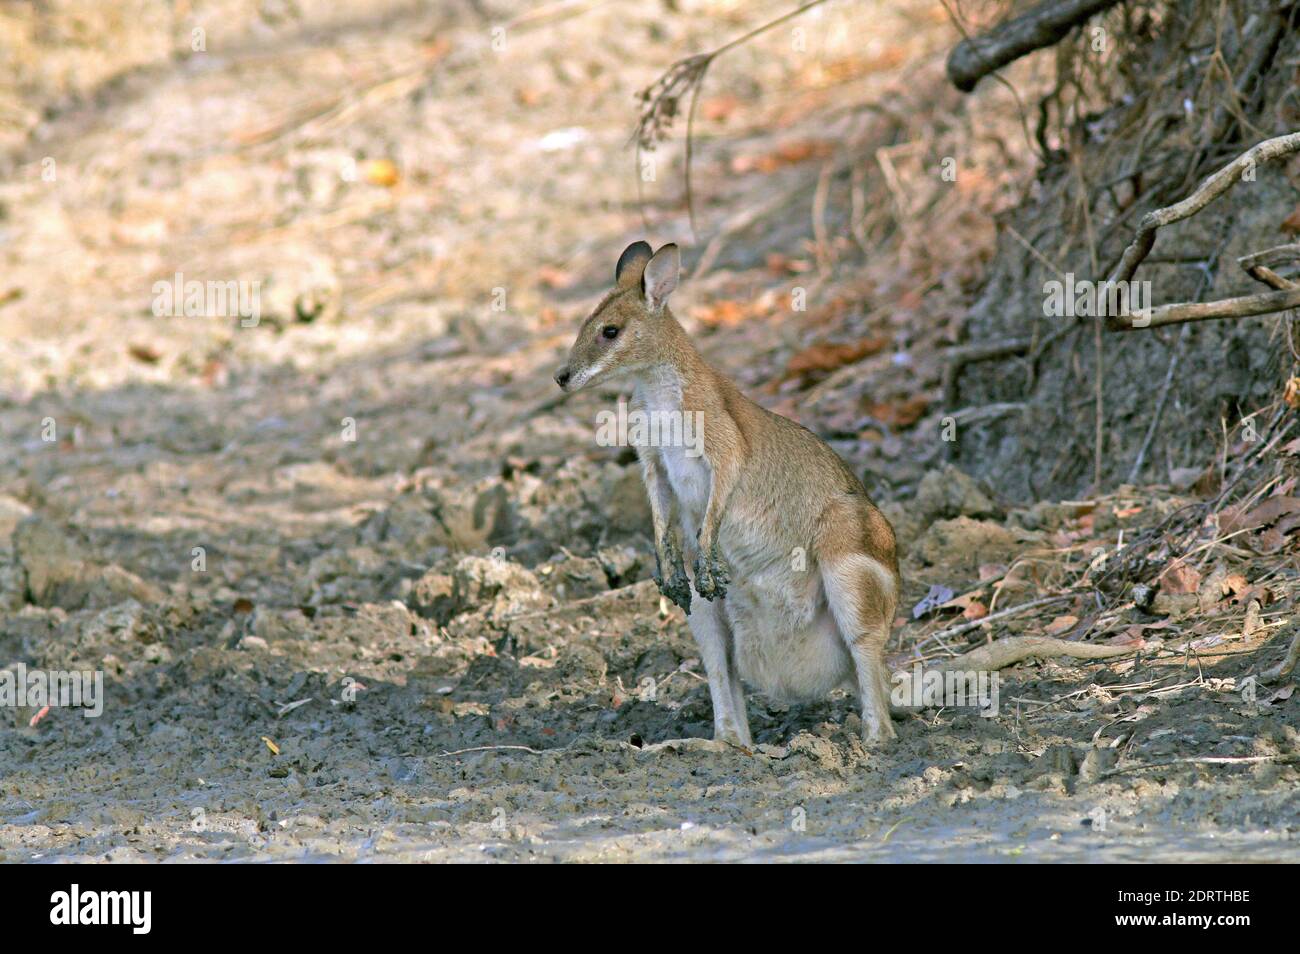 Agile Wallaby in Australia. Stock Photo